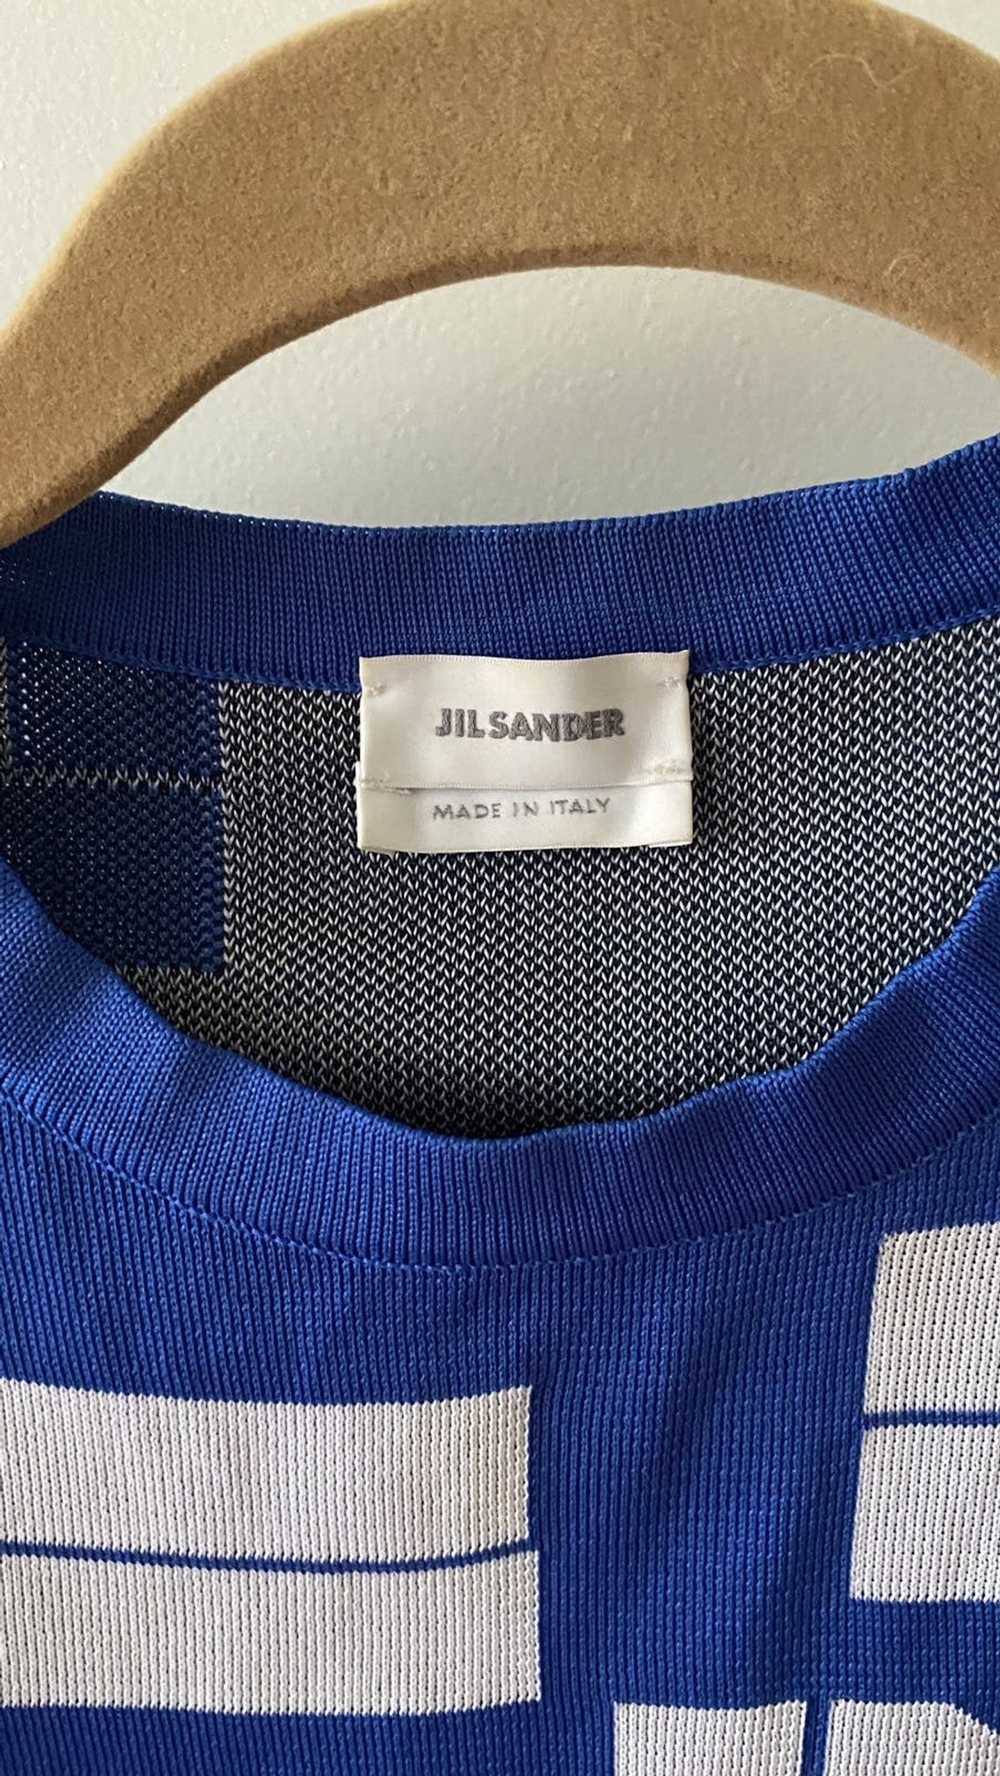 Jil Sander SS13 knit shirt - image 4